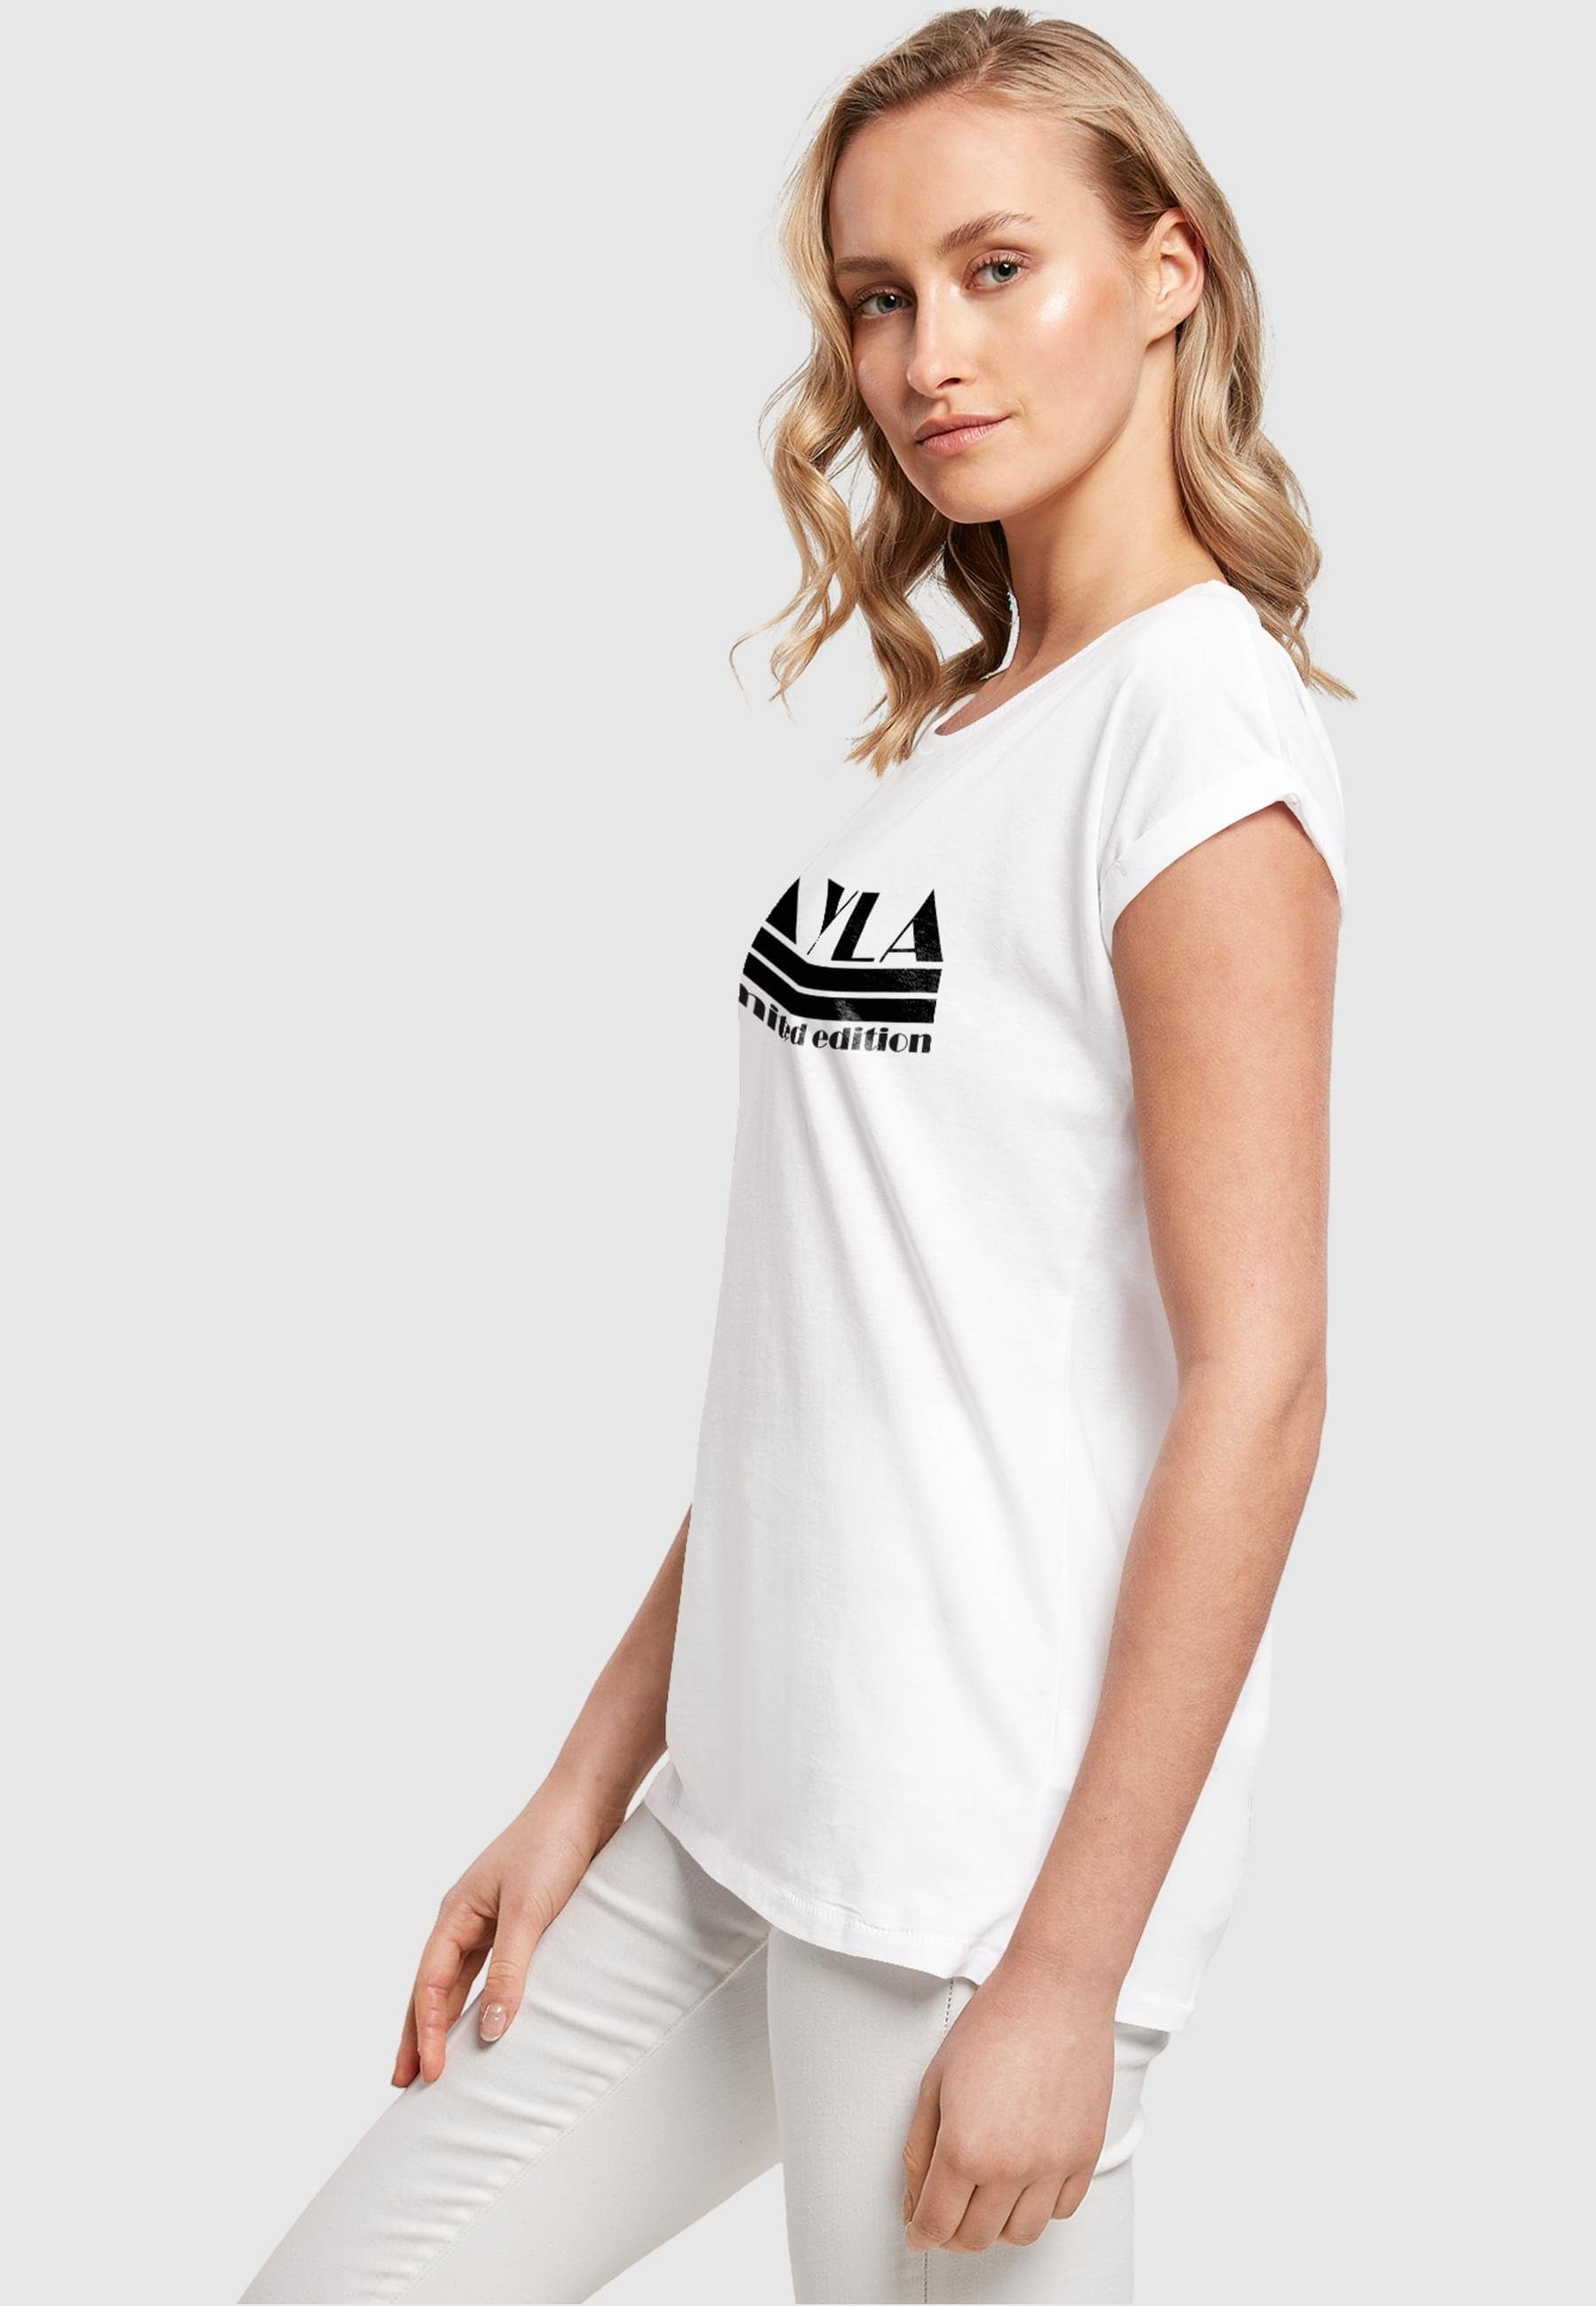 Merchcode T-Shirt Damen Ladies Layla T-Shirt Edition - Limited (1-tlg) white